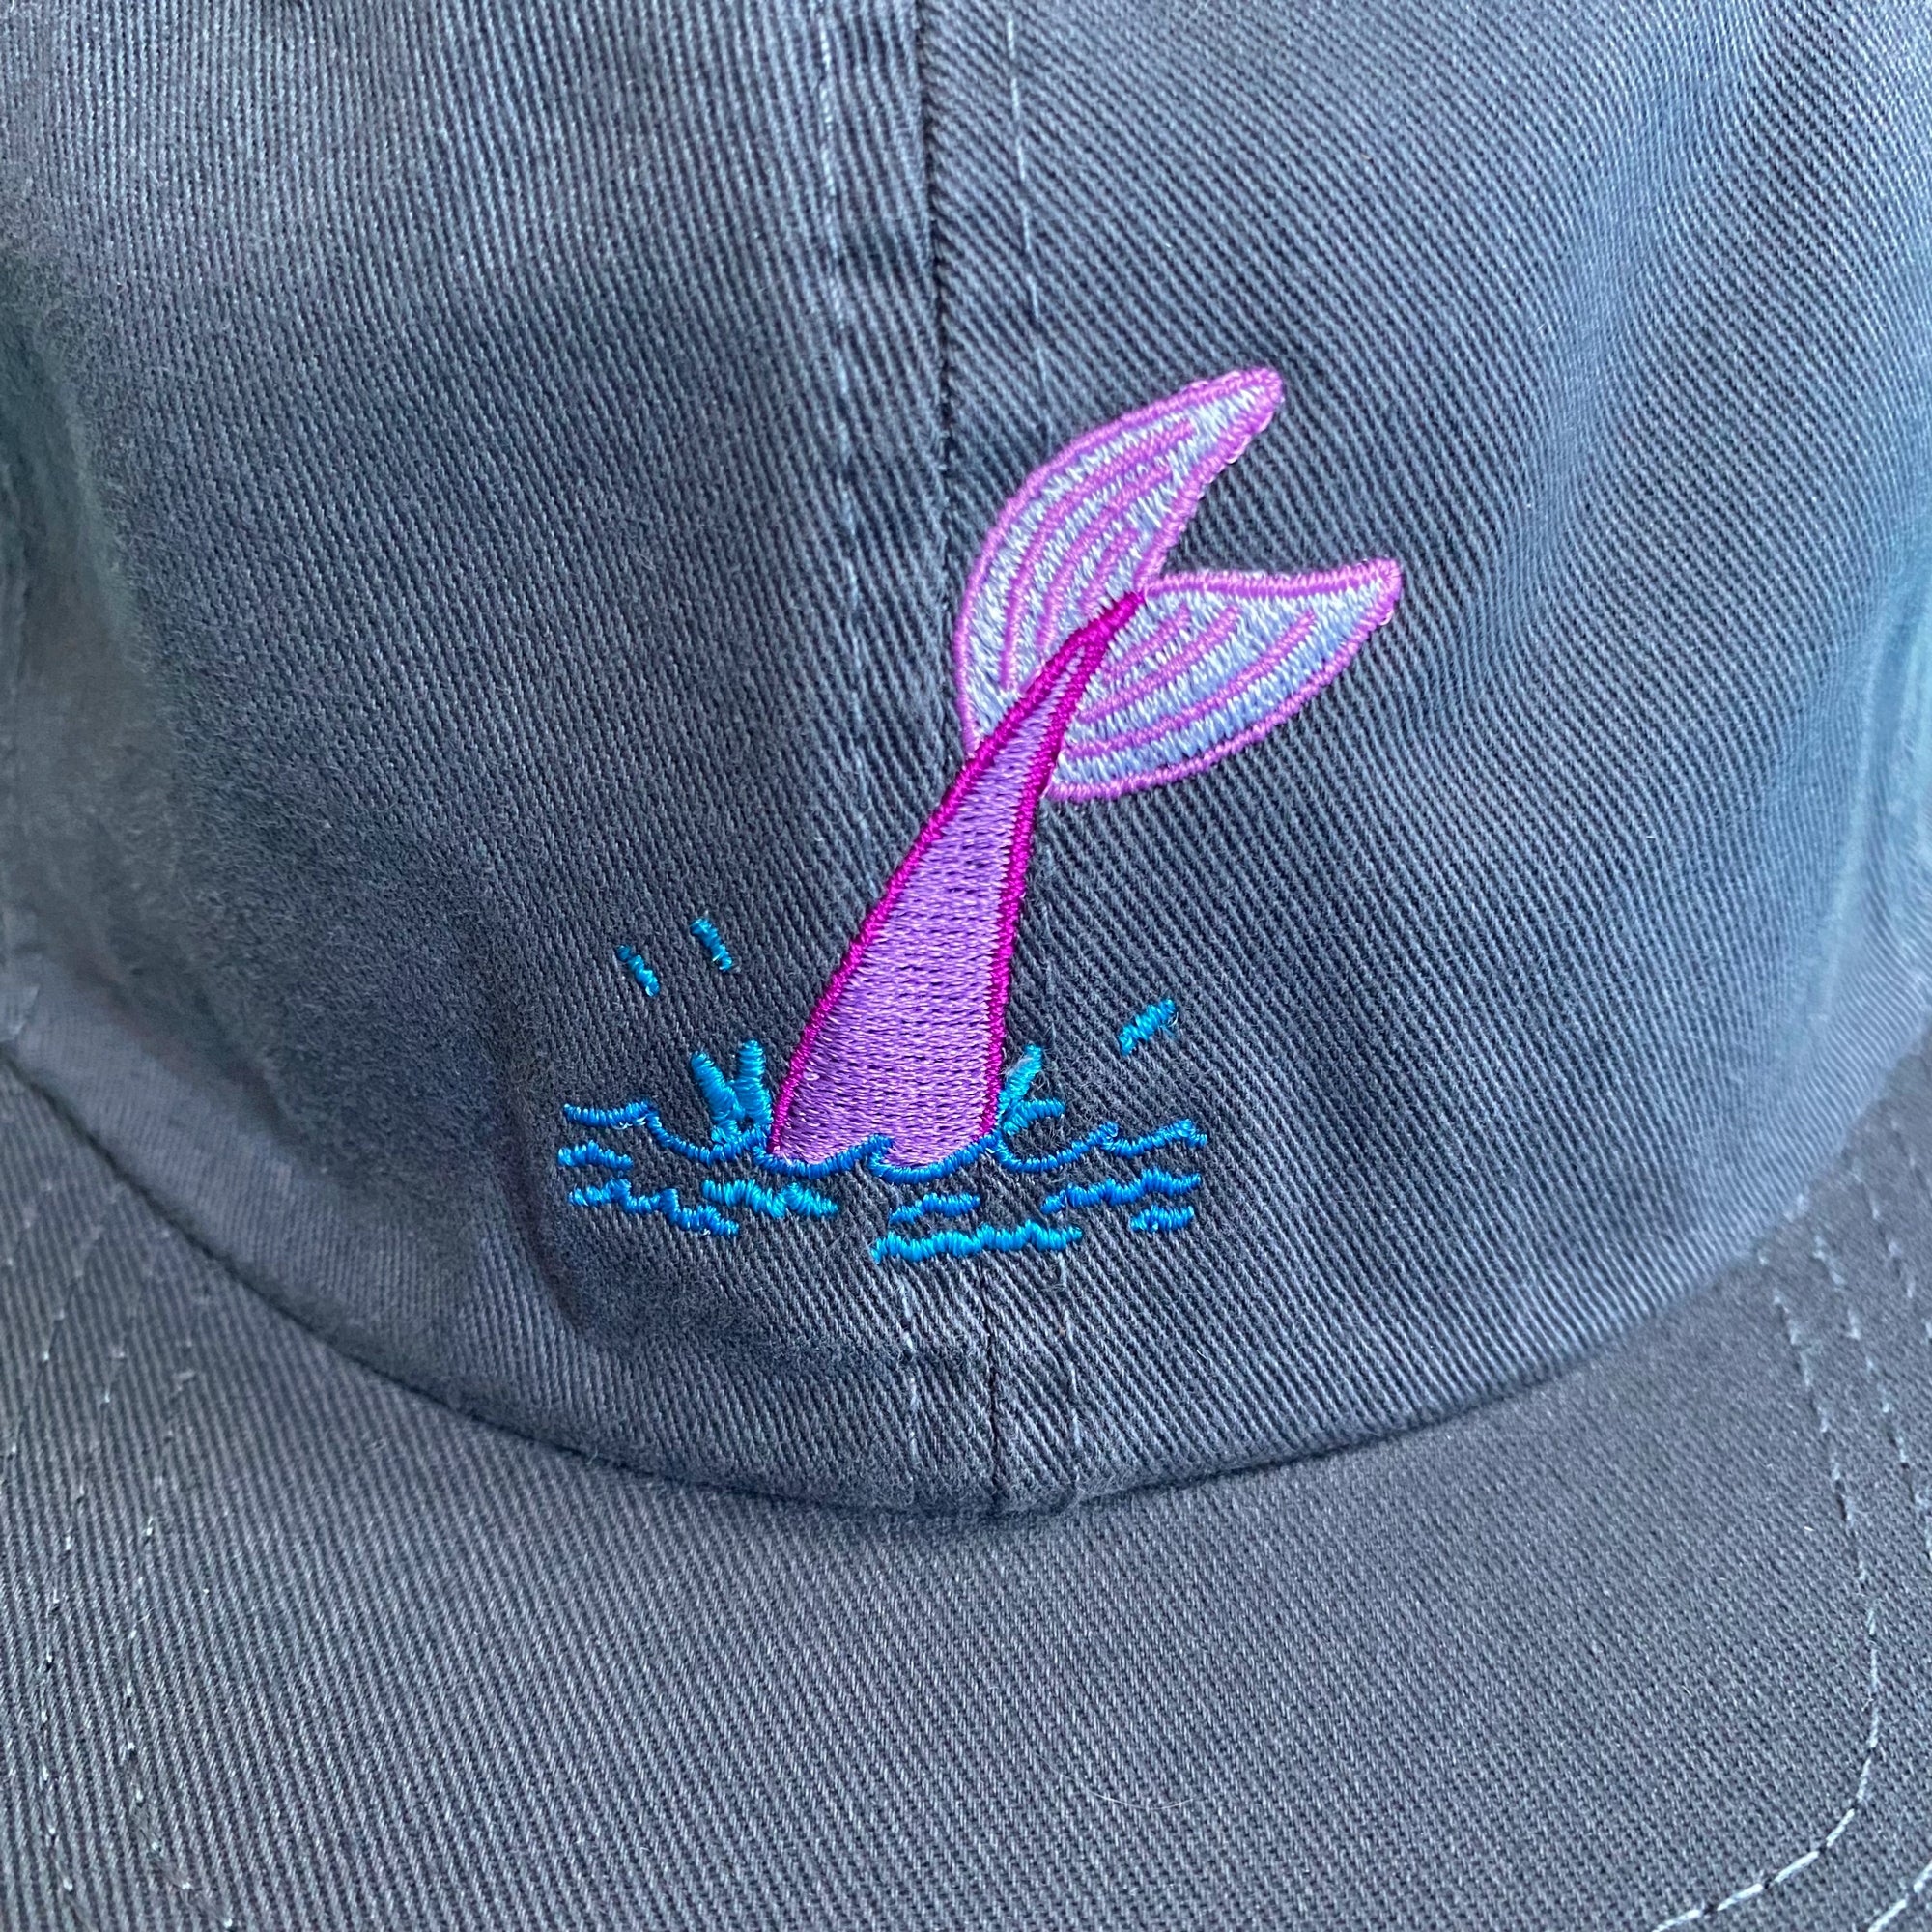 Summer Splash - Embroidered Mermaid Tail Cap - Merpola